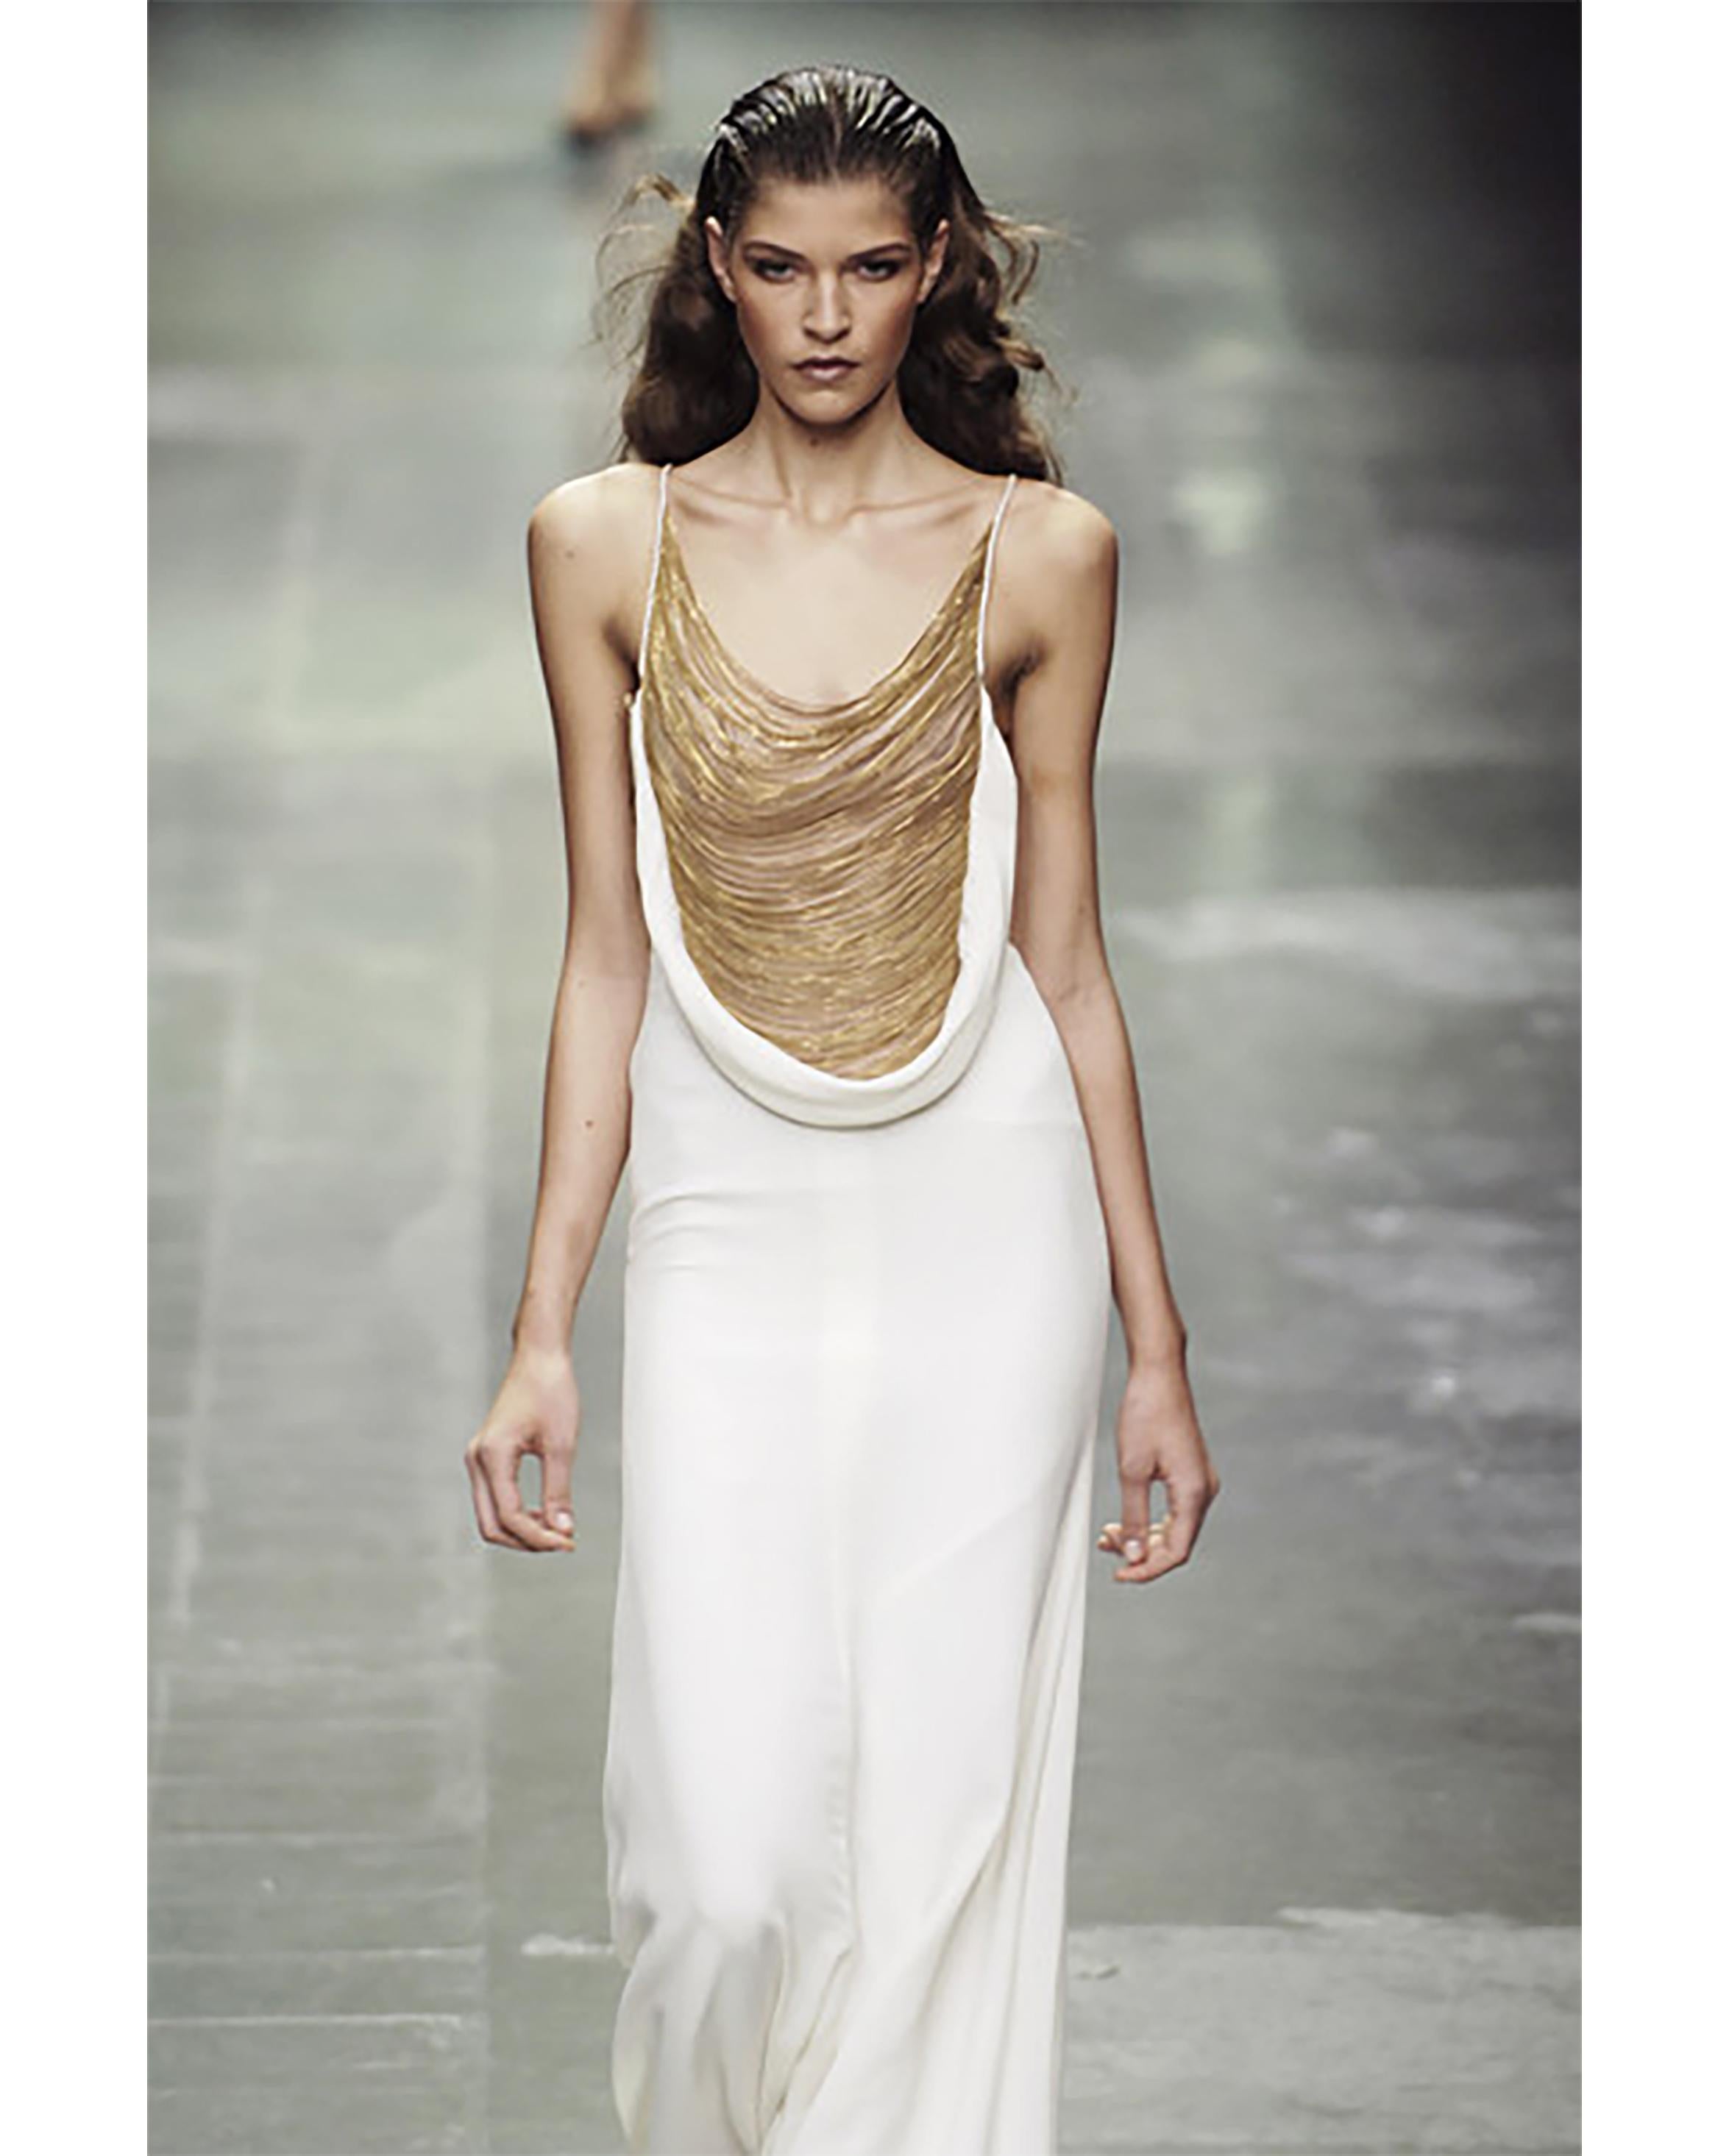 S/S 2006 Alexander McQueen Gold Chain White Gown 1